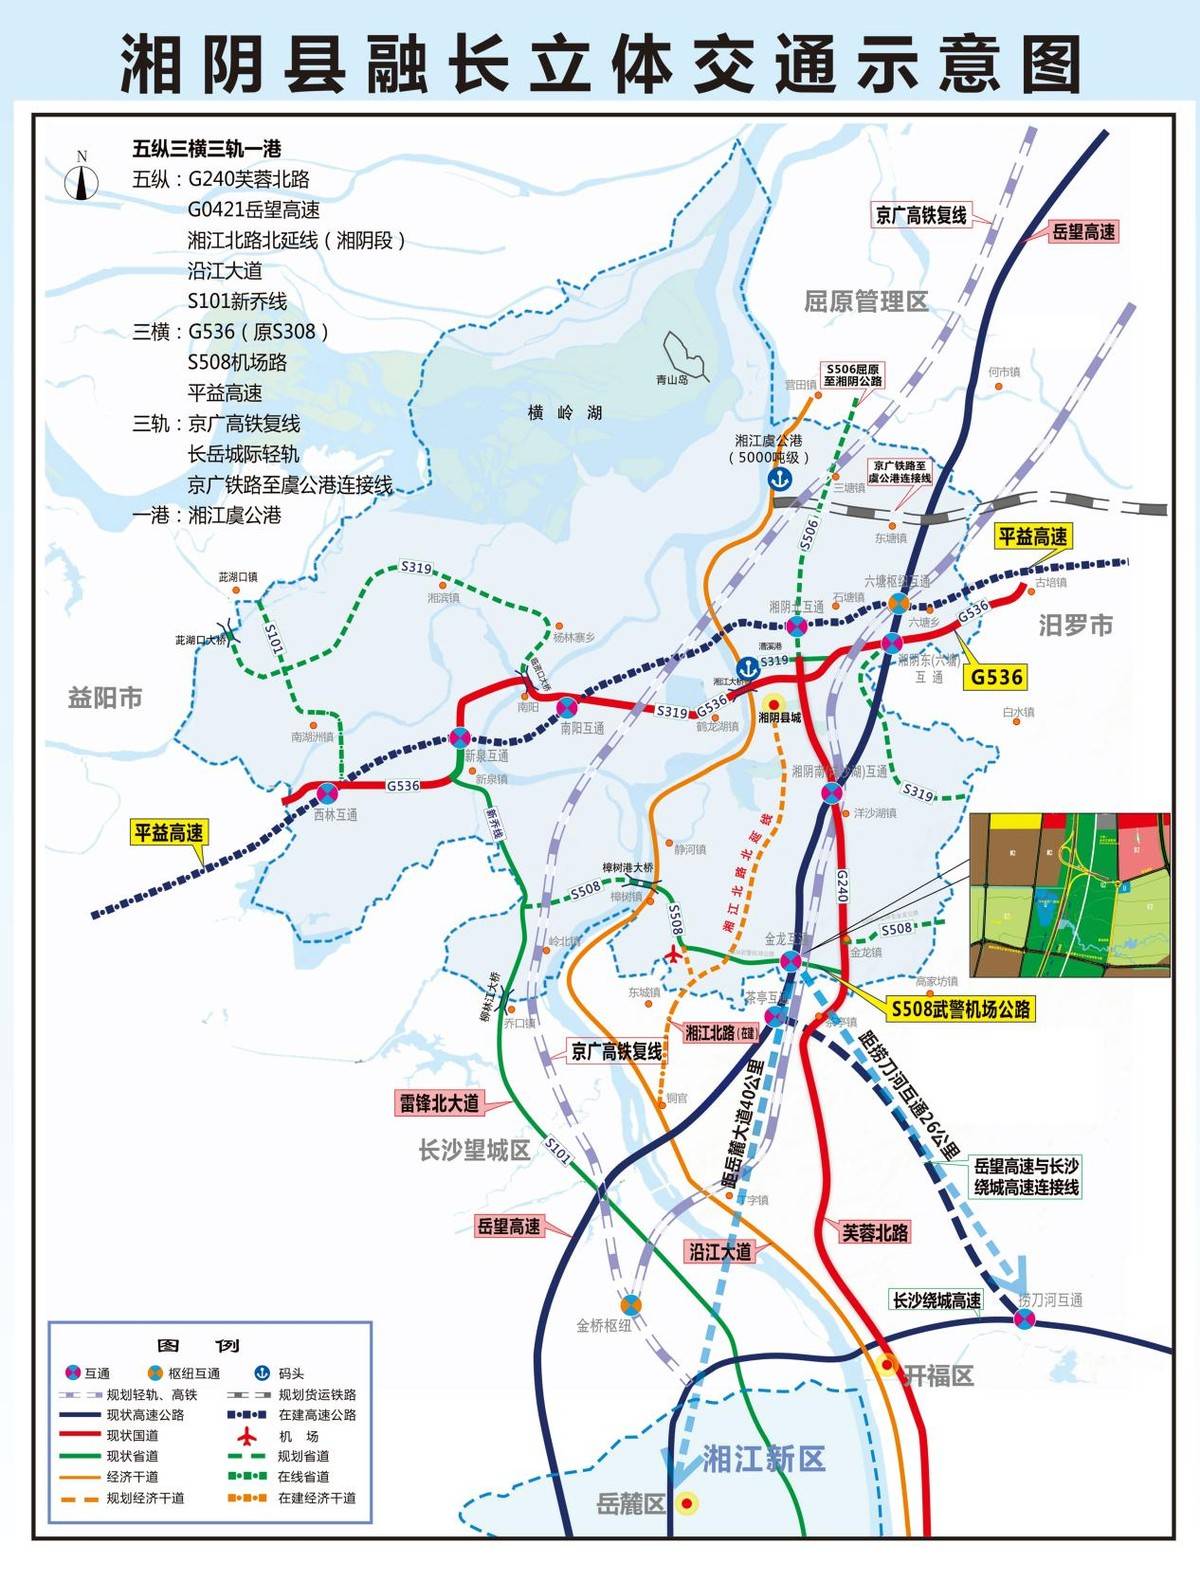 g240湘阴段和雷锋大道北延线建成通车,g536拓改和平益高速湘阴段加速